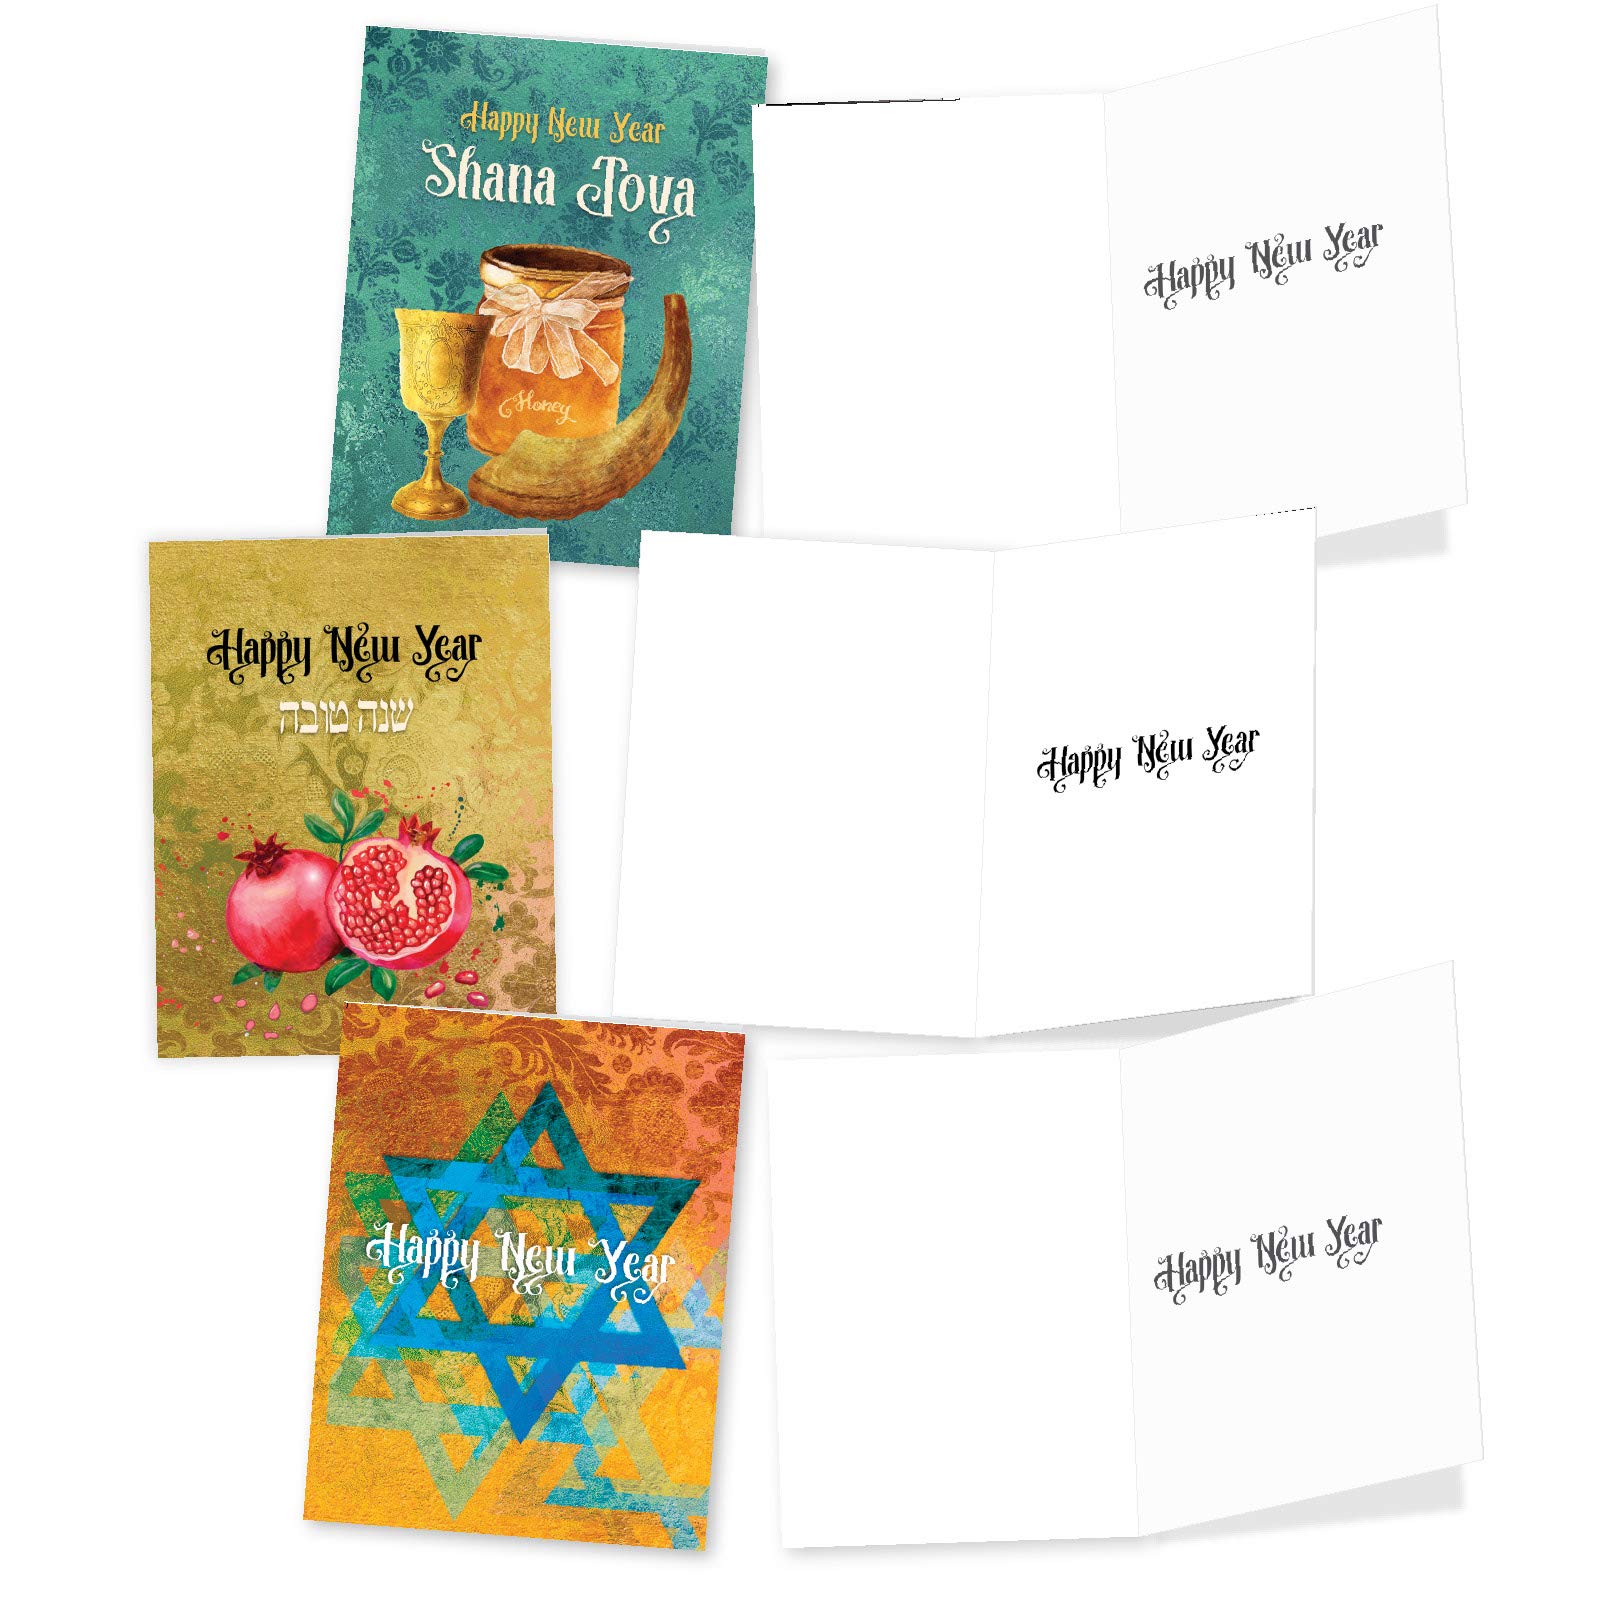 Shana Tova - 10 Assorted Jewish New Years Cards with Envelopes (4 x 5.12 Inch) - Rosh Hashanah Celebration Greetings - Boxed, Religious Happy Holiday Note Card Set AM6135RHG-B1x10